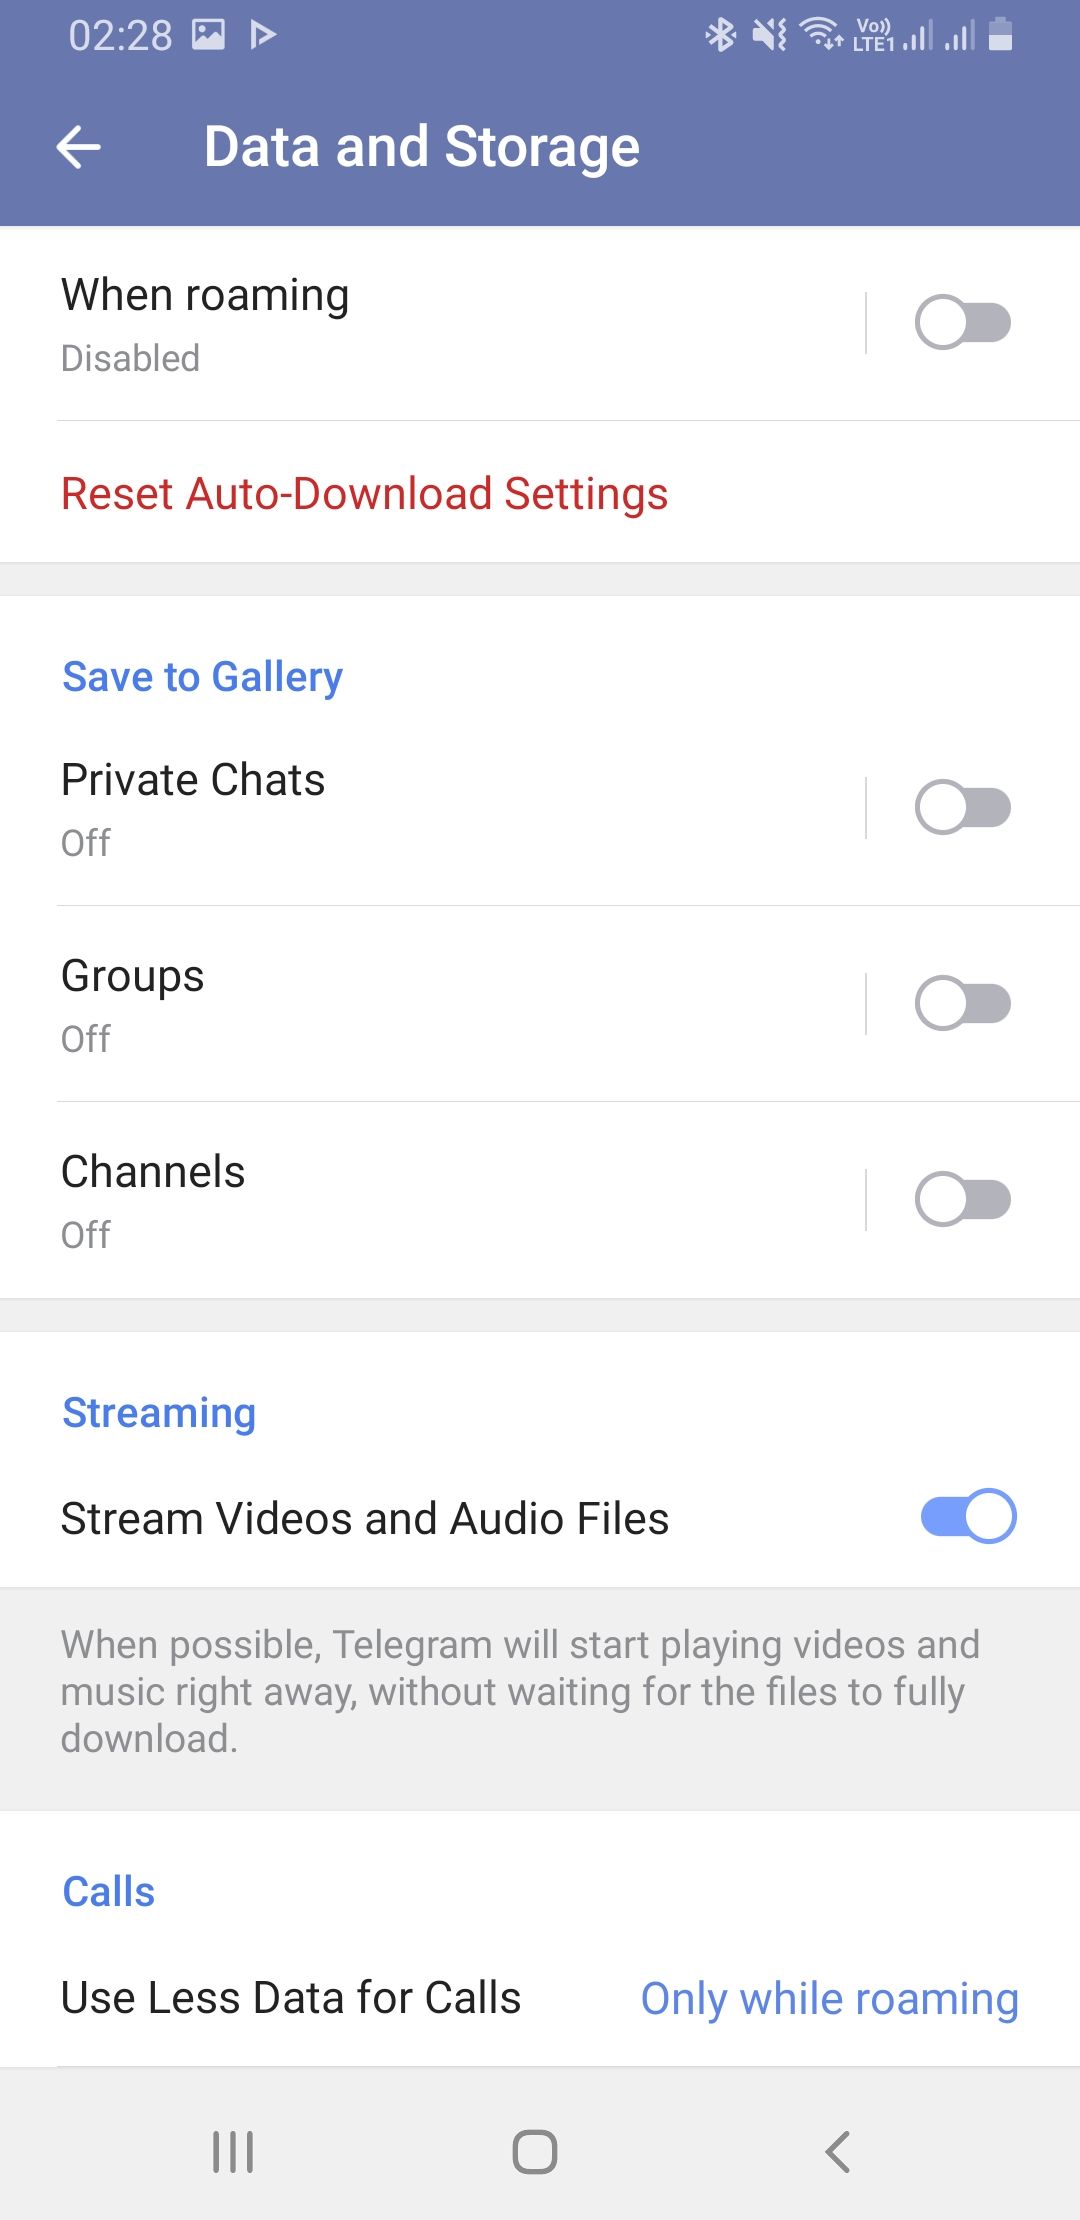 Telegram Data and Storage settings